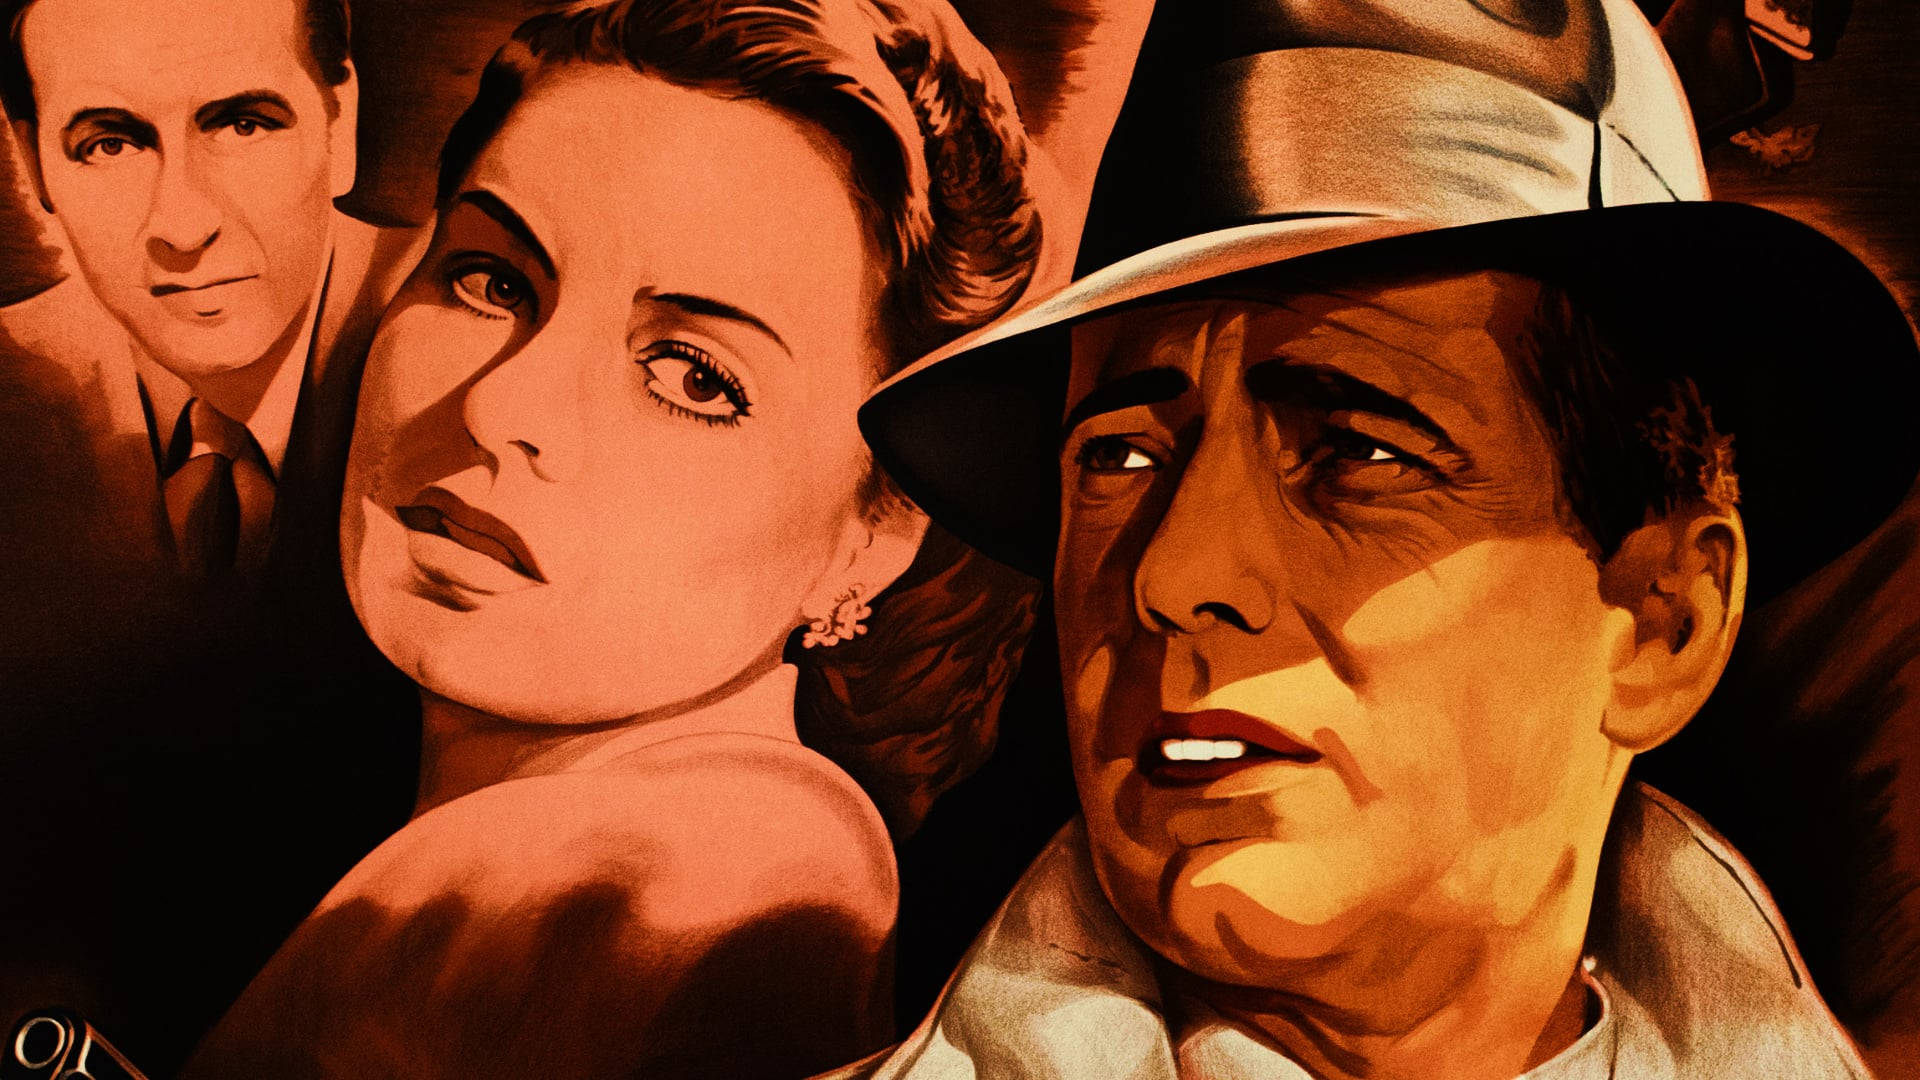 Casablanca Comic Art Tapet: Et farverigt tapet designet med inspiration fra erhvervet komikkunst. Wallpaper